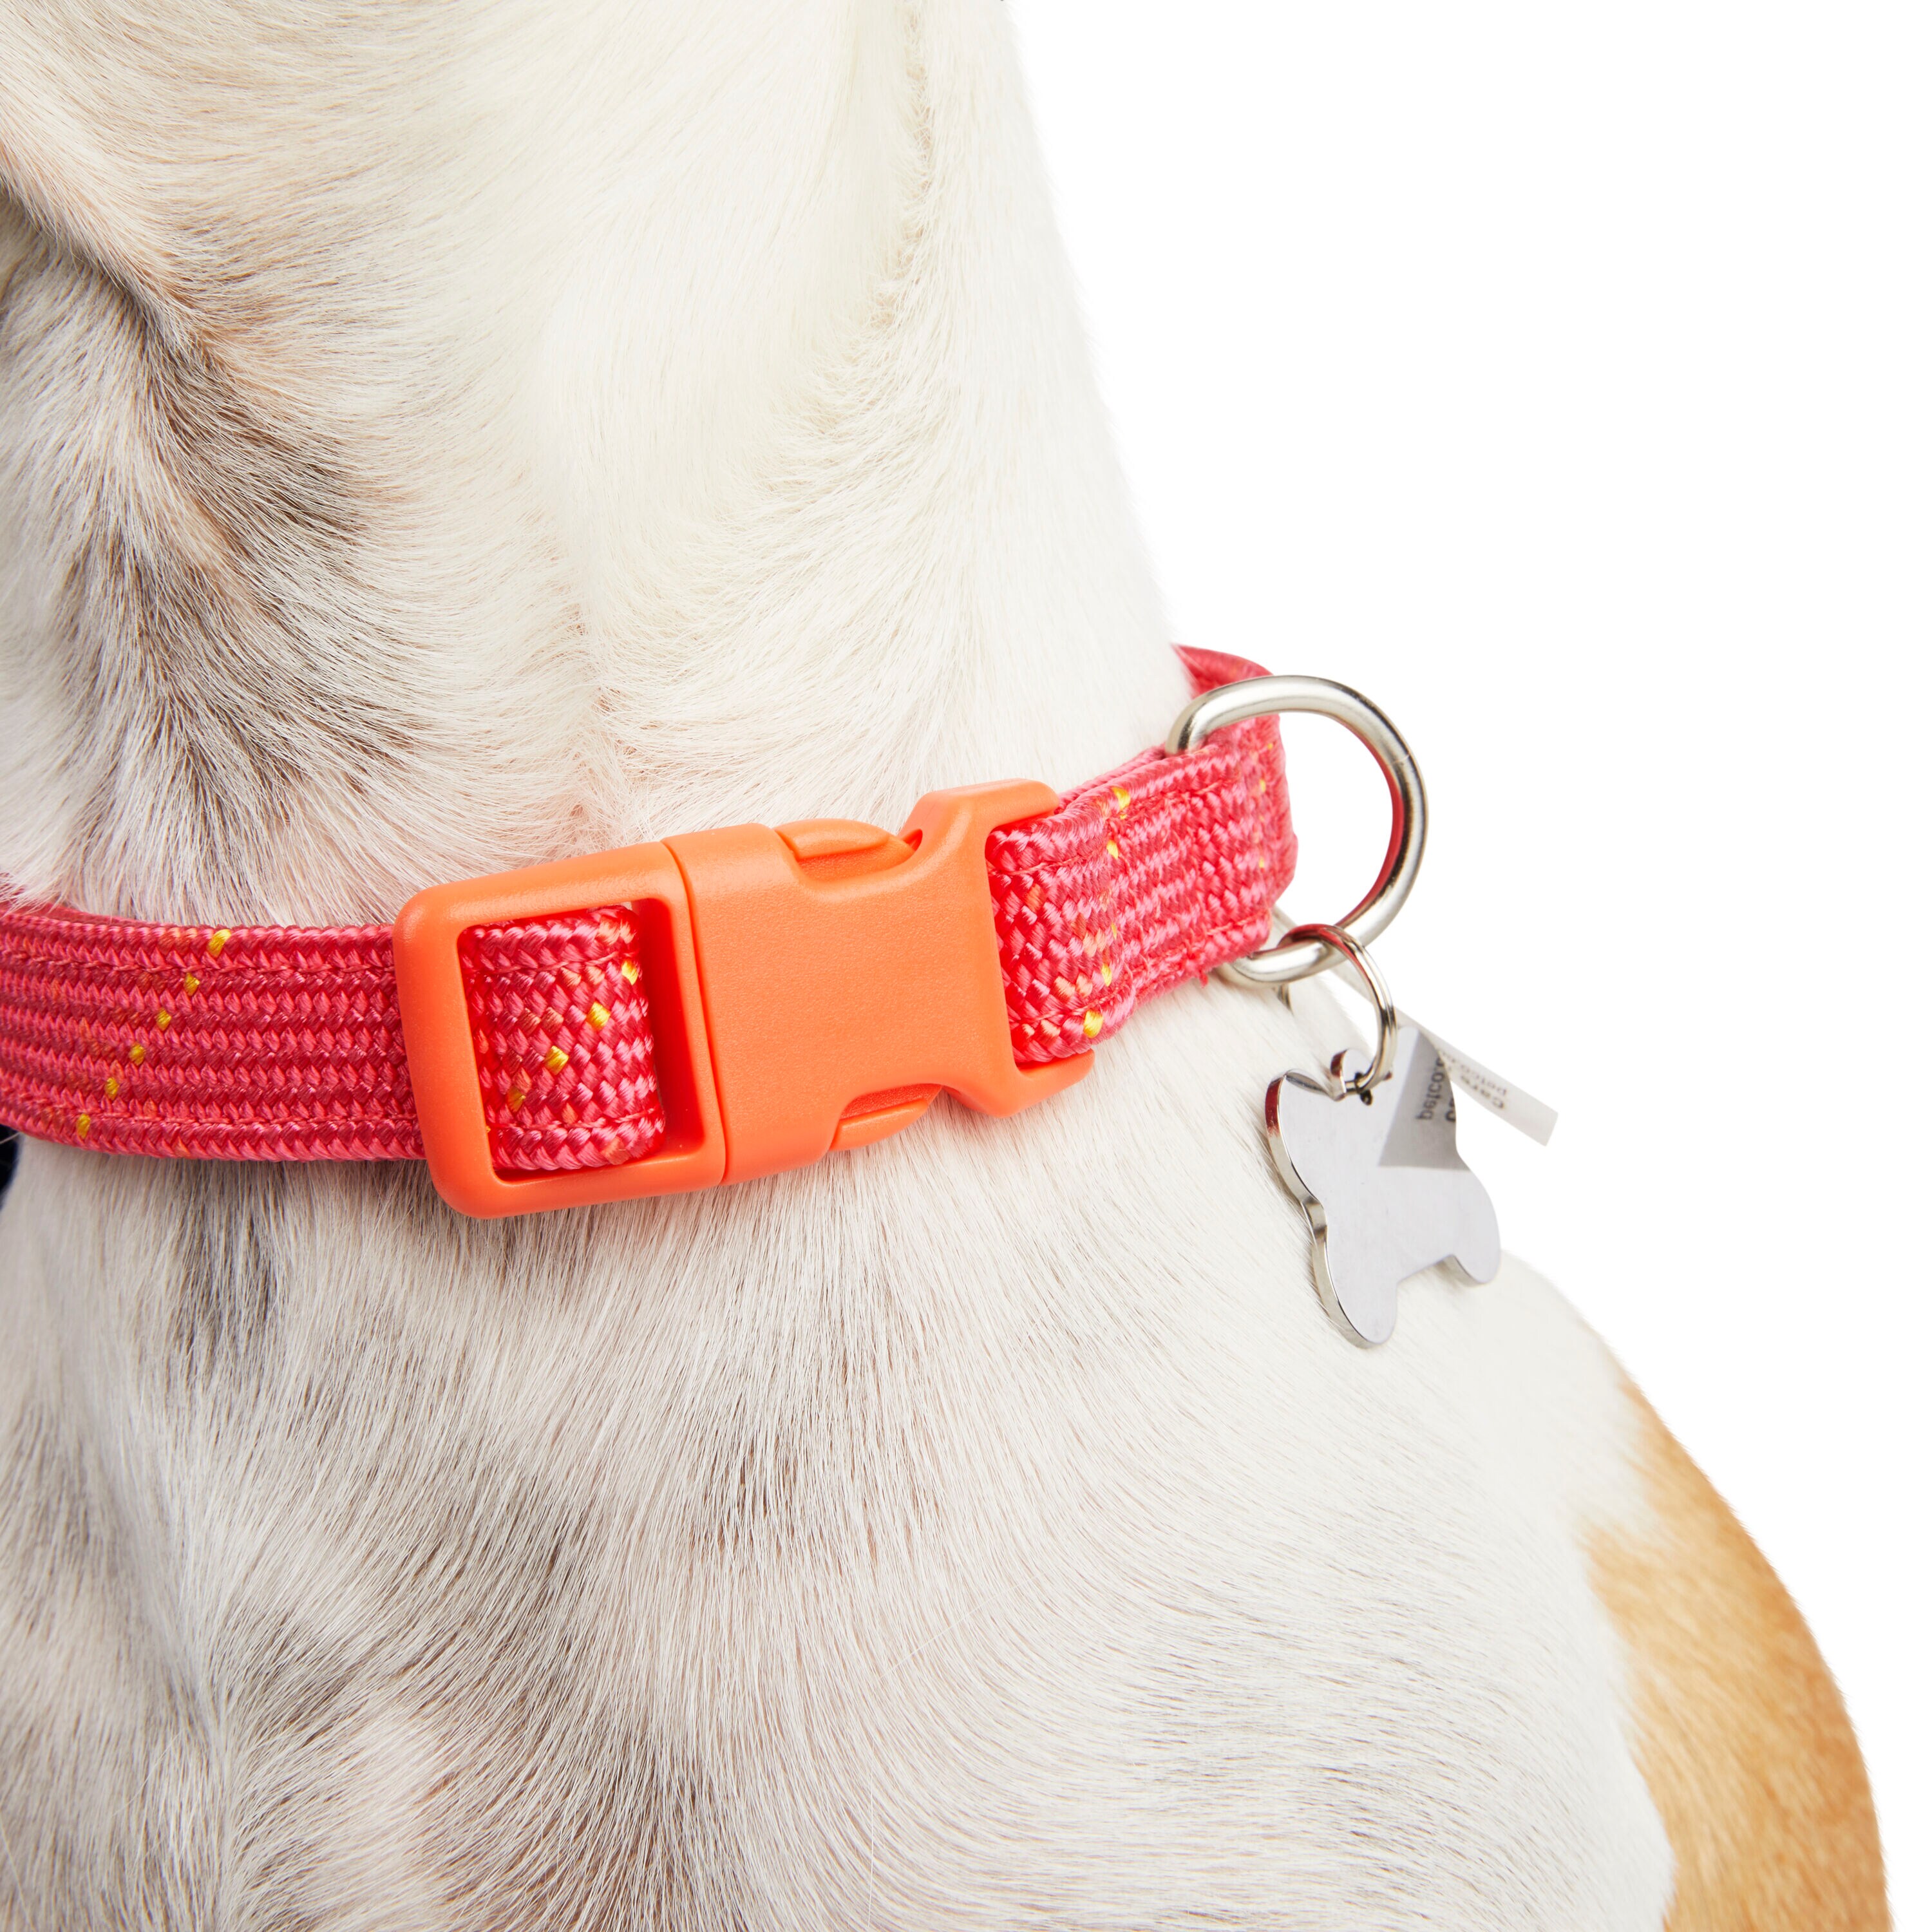 YOULY The Wanderer Red & Orange Patterned Dog Collar, Medium